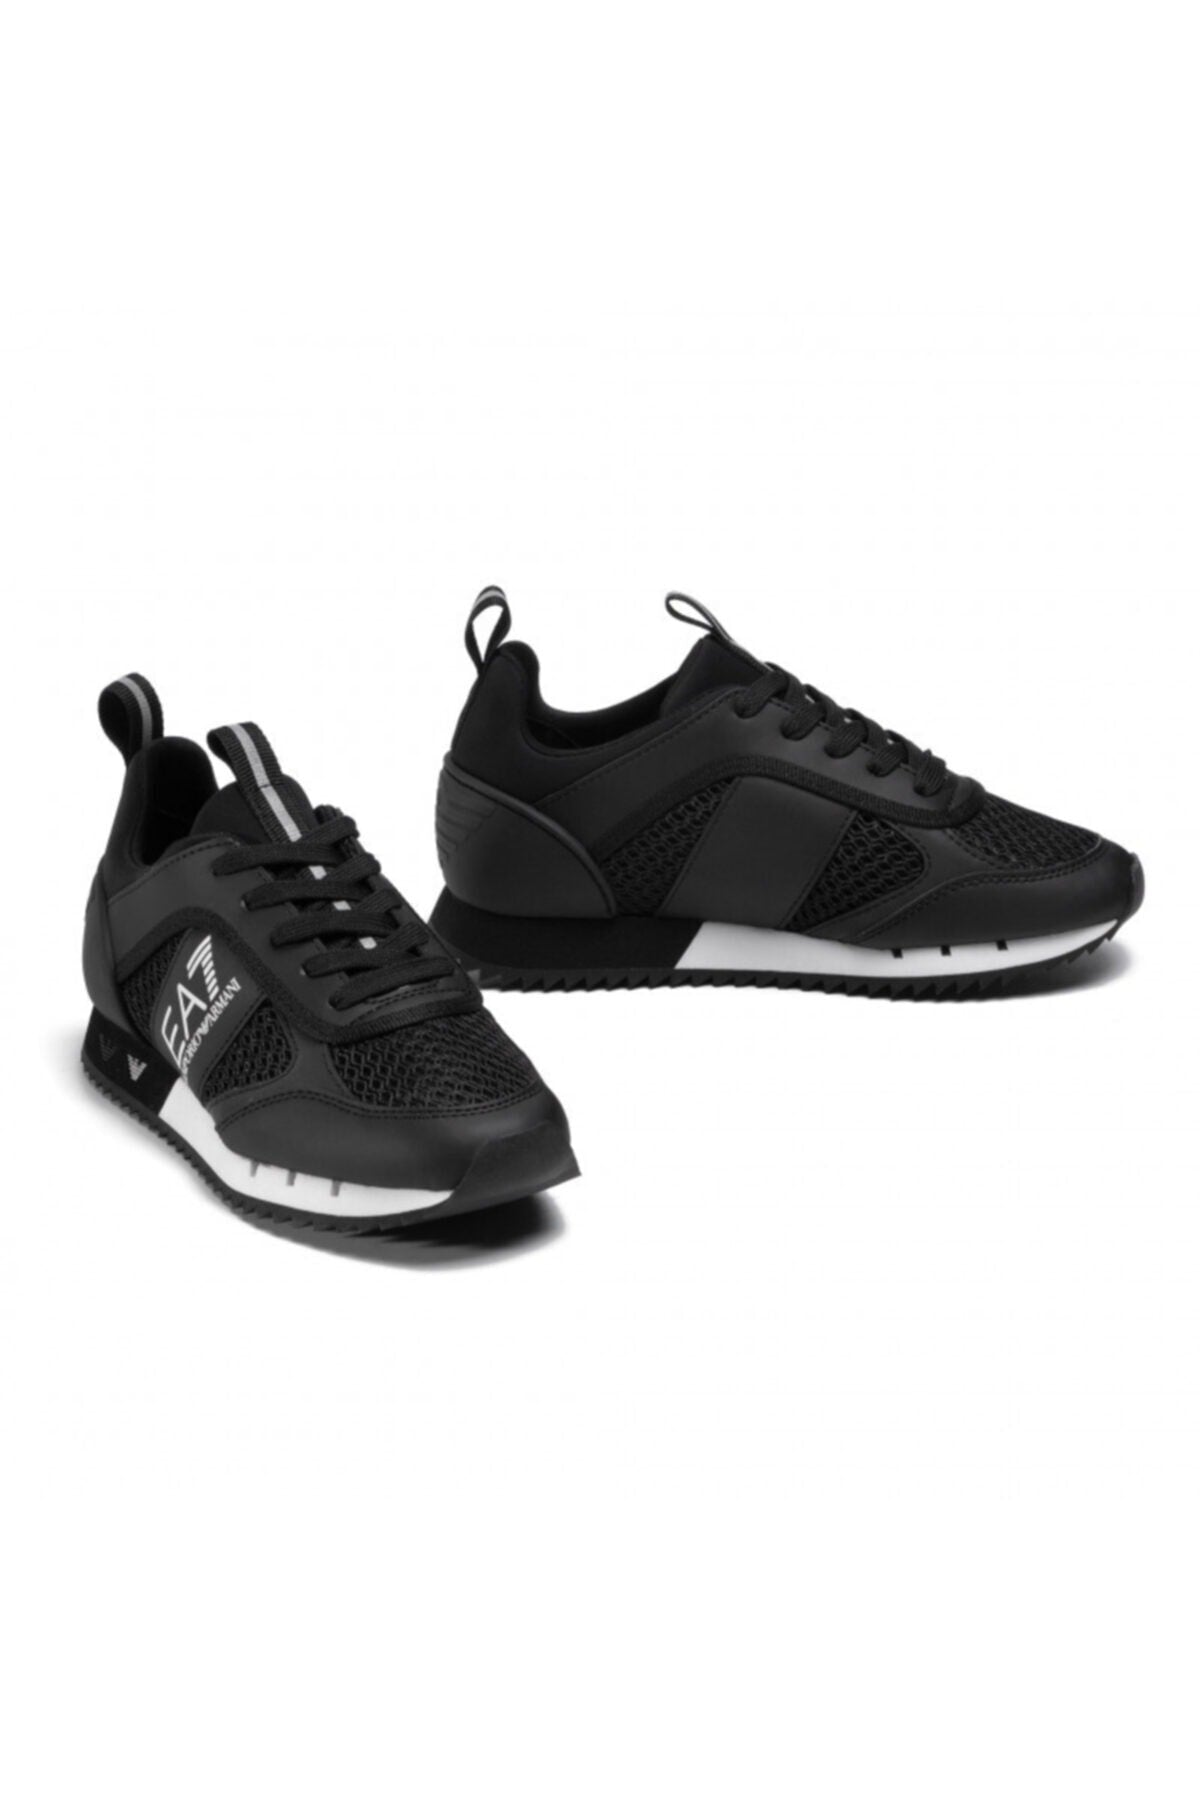 Black - Emporio Armani Men's Shoes X8x027-xk050-a120